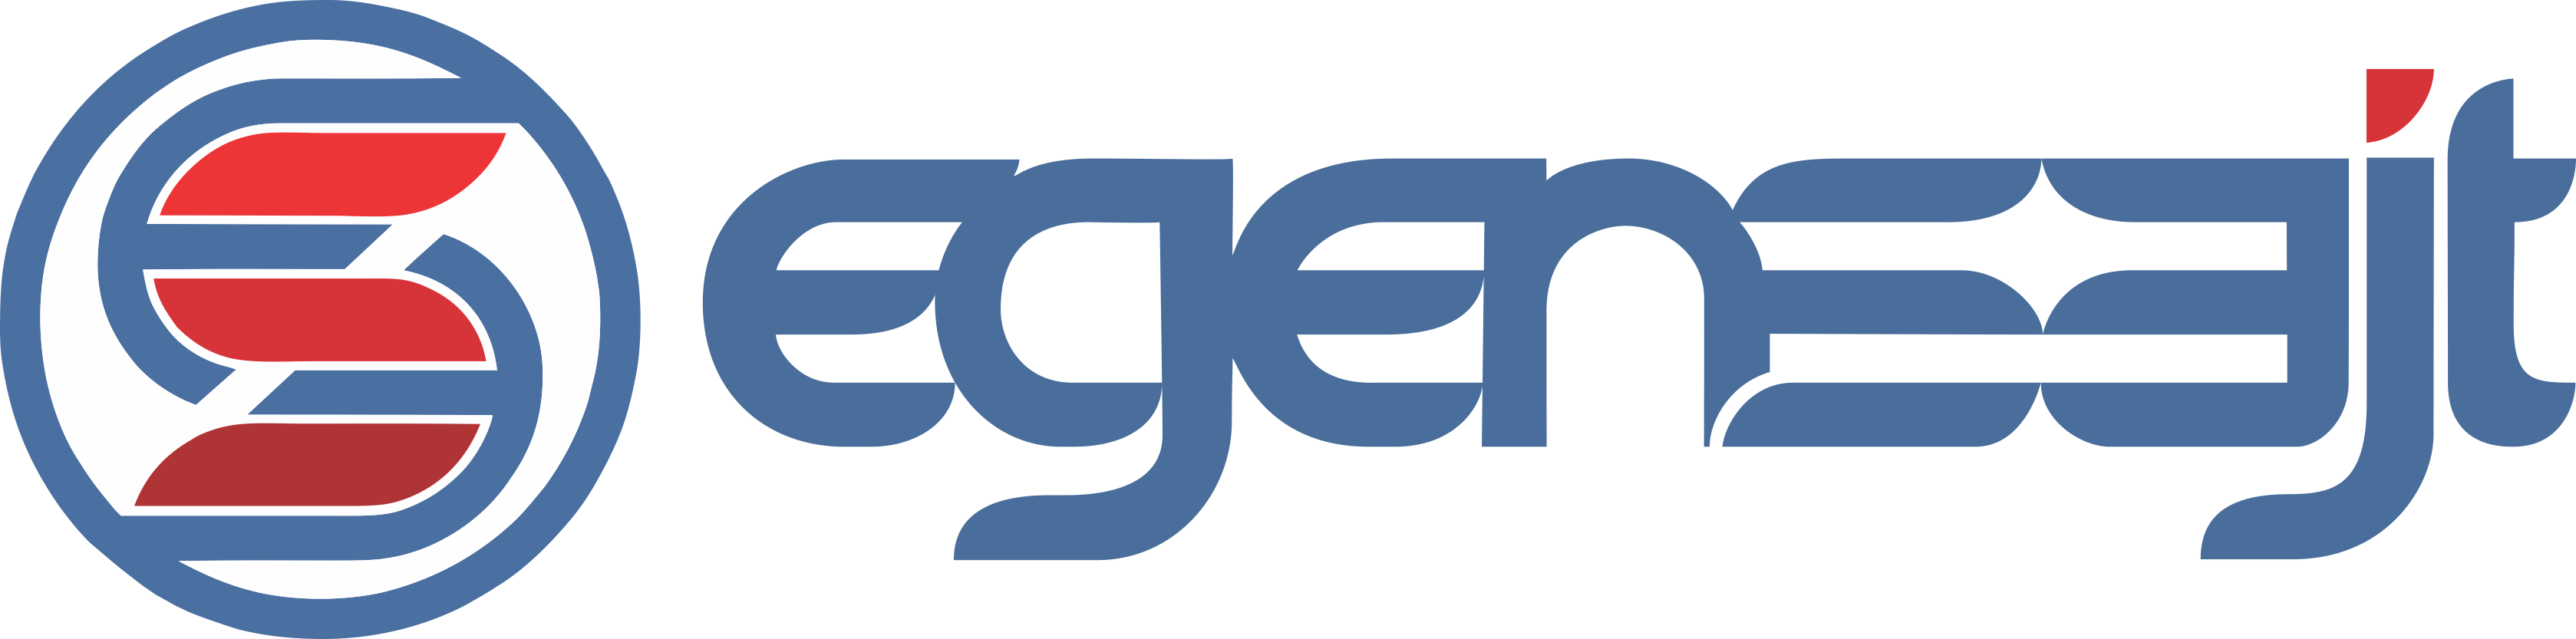 Egensajt logotyp